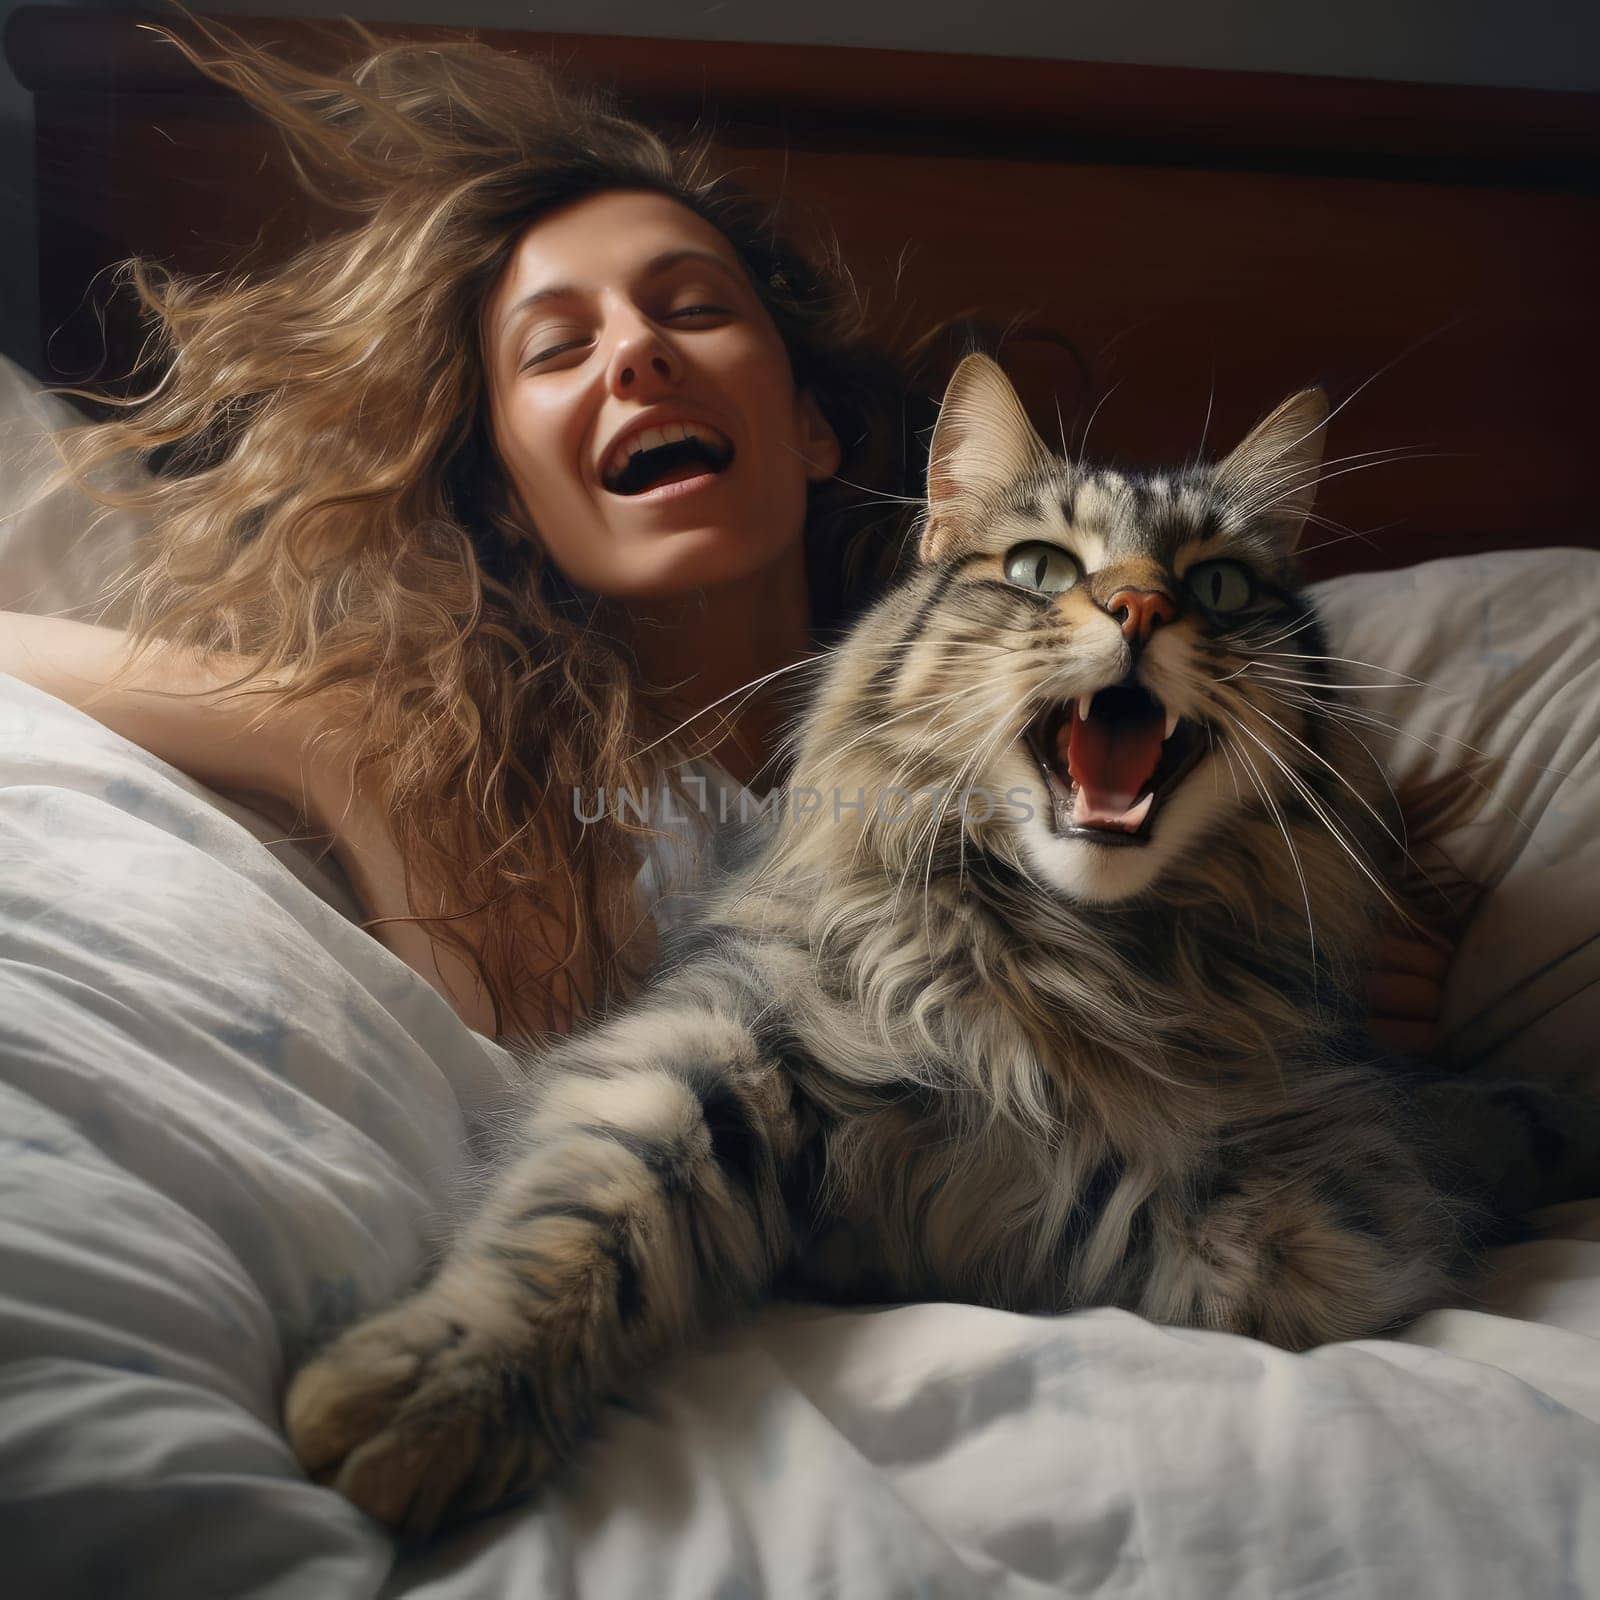 Disgruntled cat in bed screaming